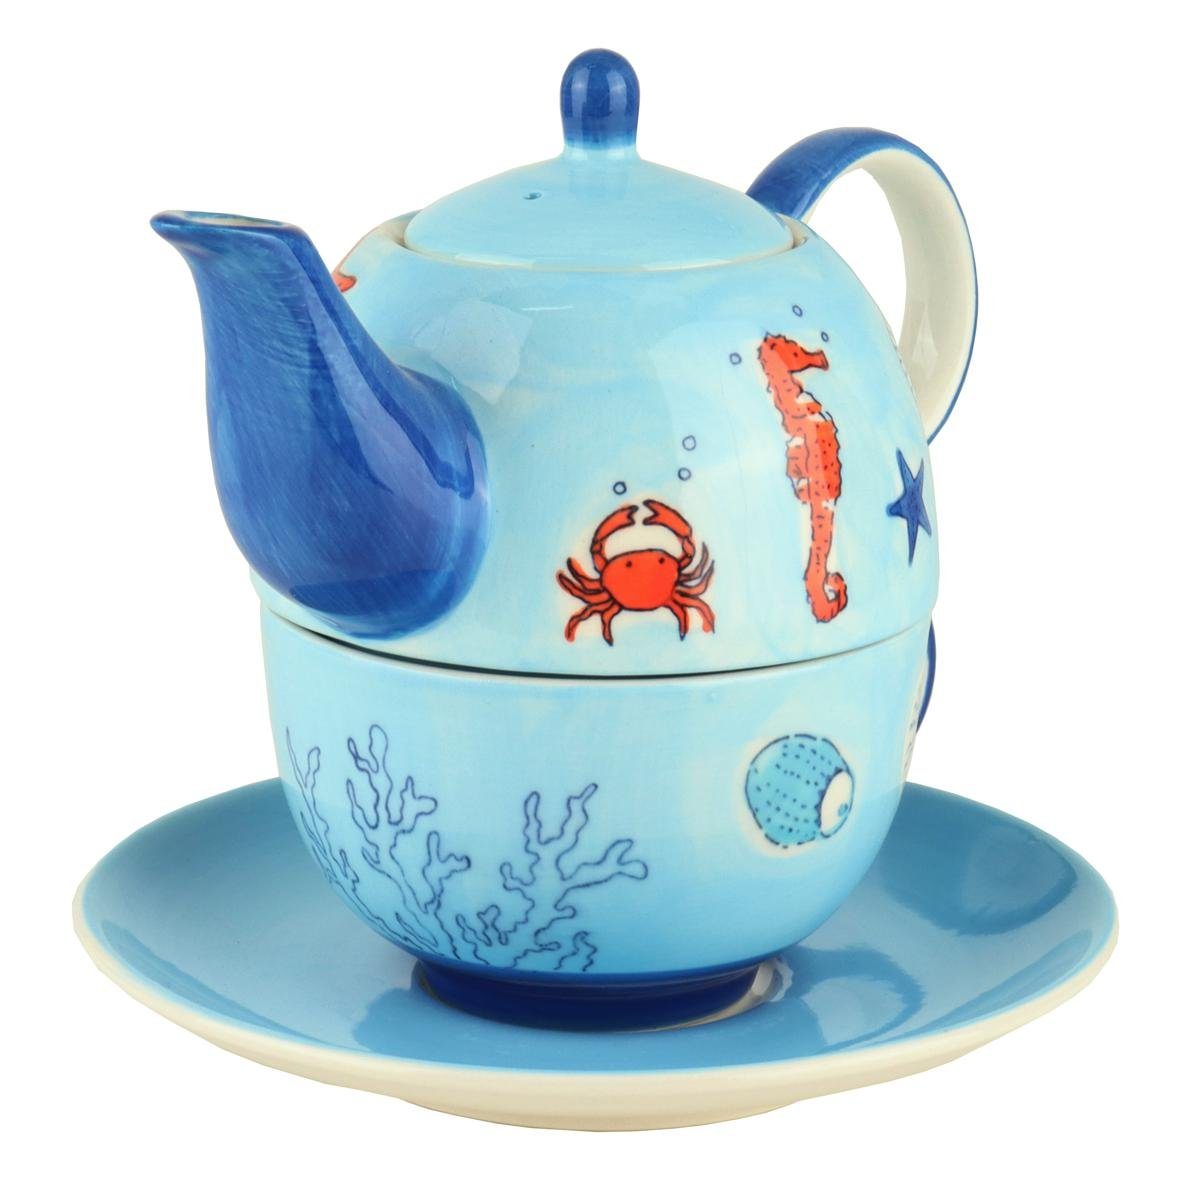 Mila Teekanne Mila Keramik Ocean, (Set) l, the Save Tea One 0.4 Tee-Set for